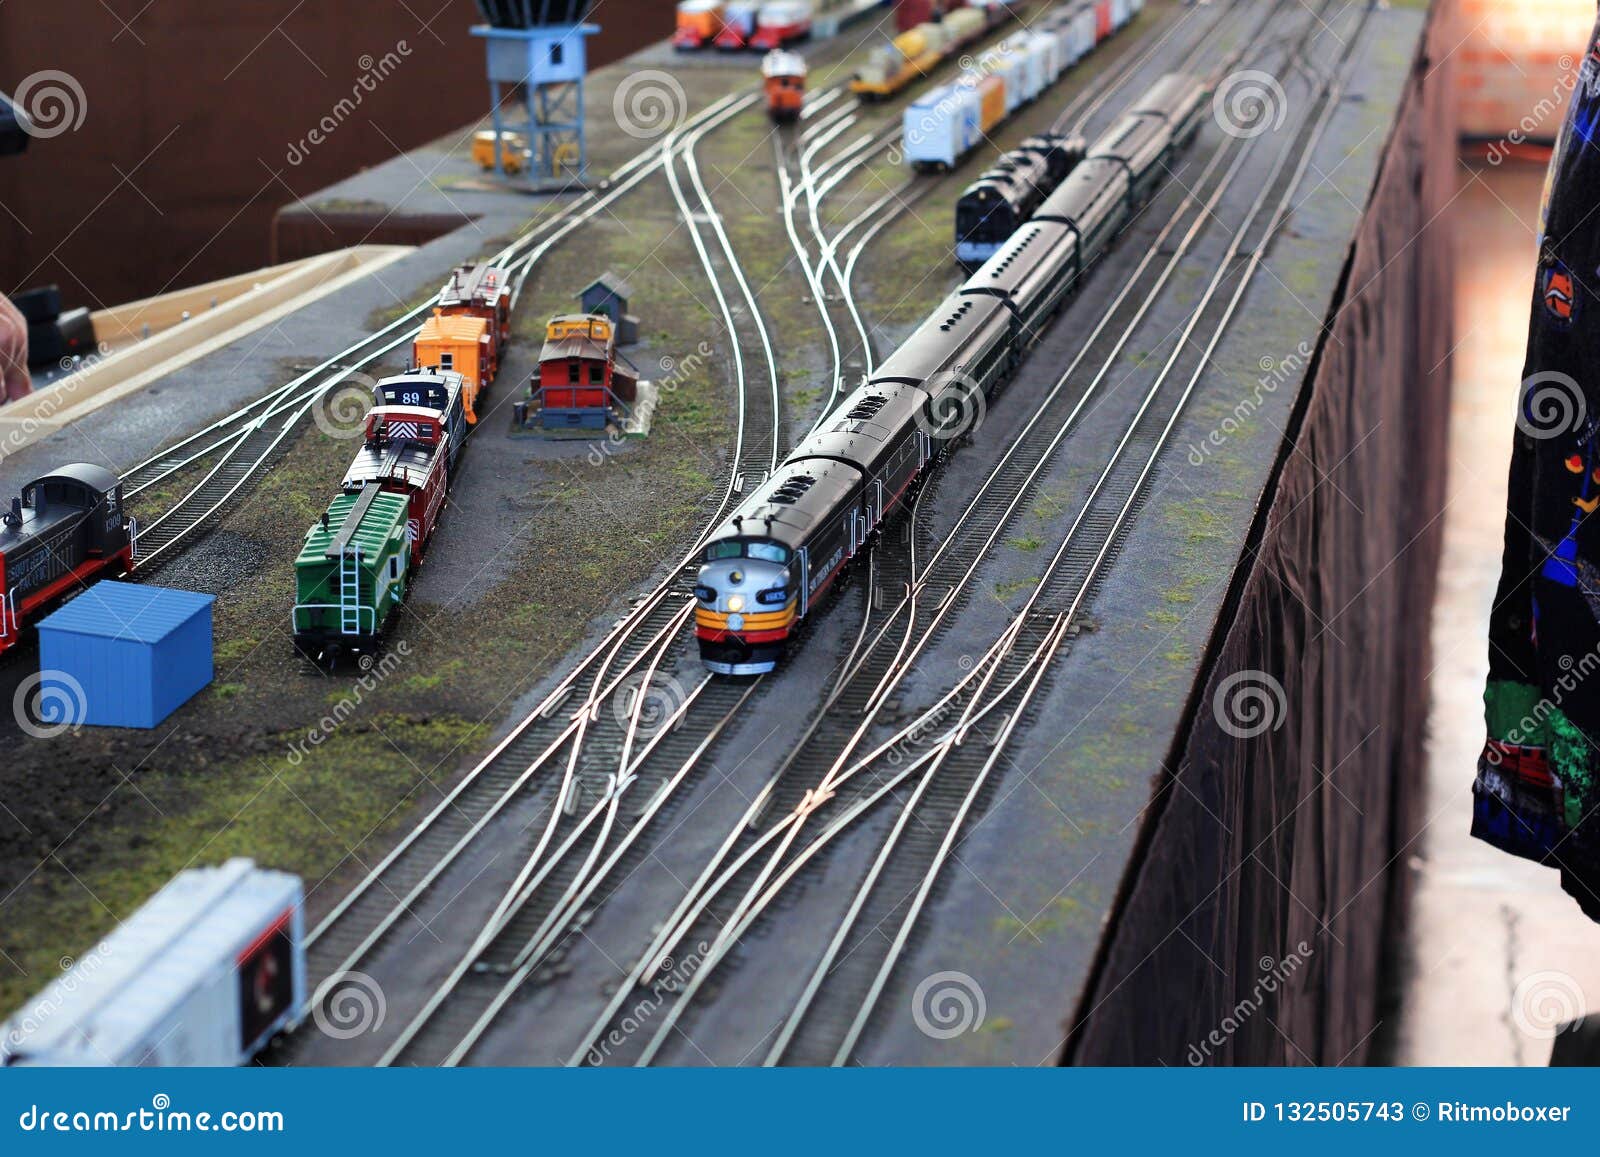 Model Train Images